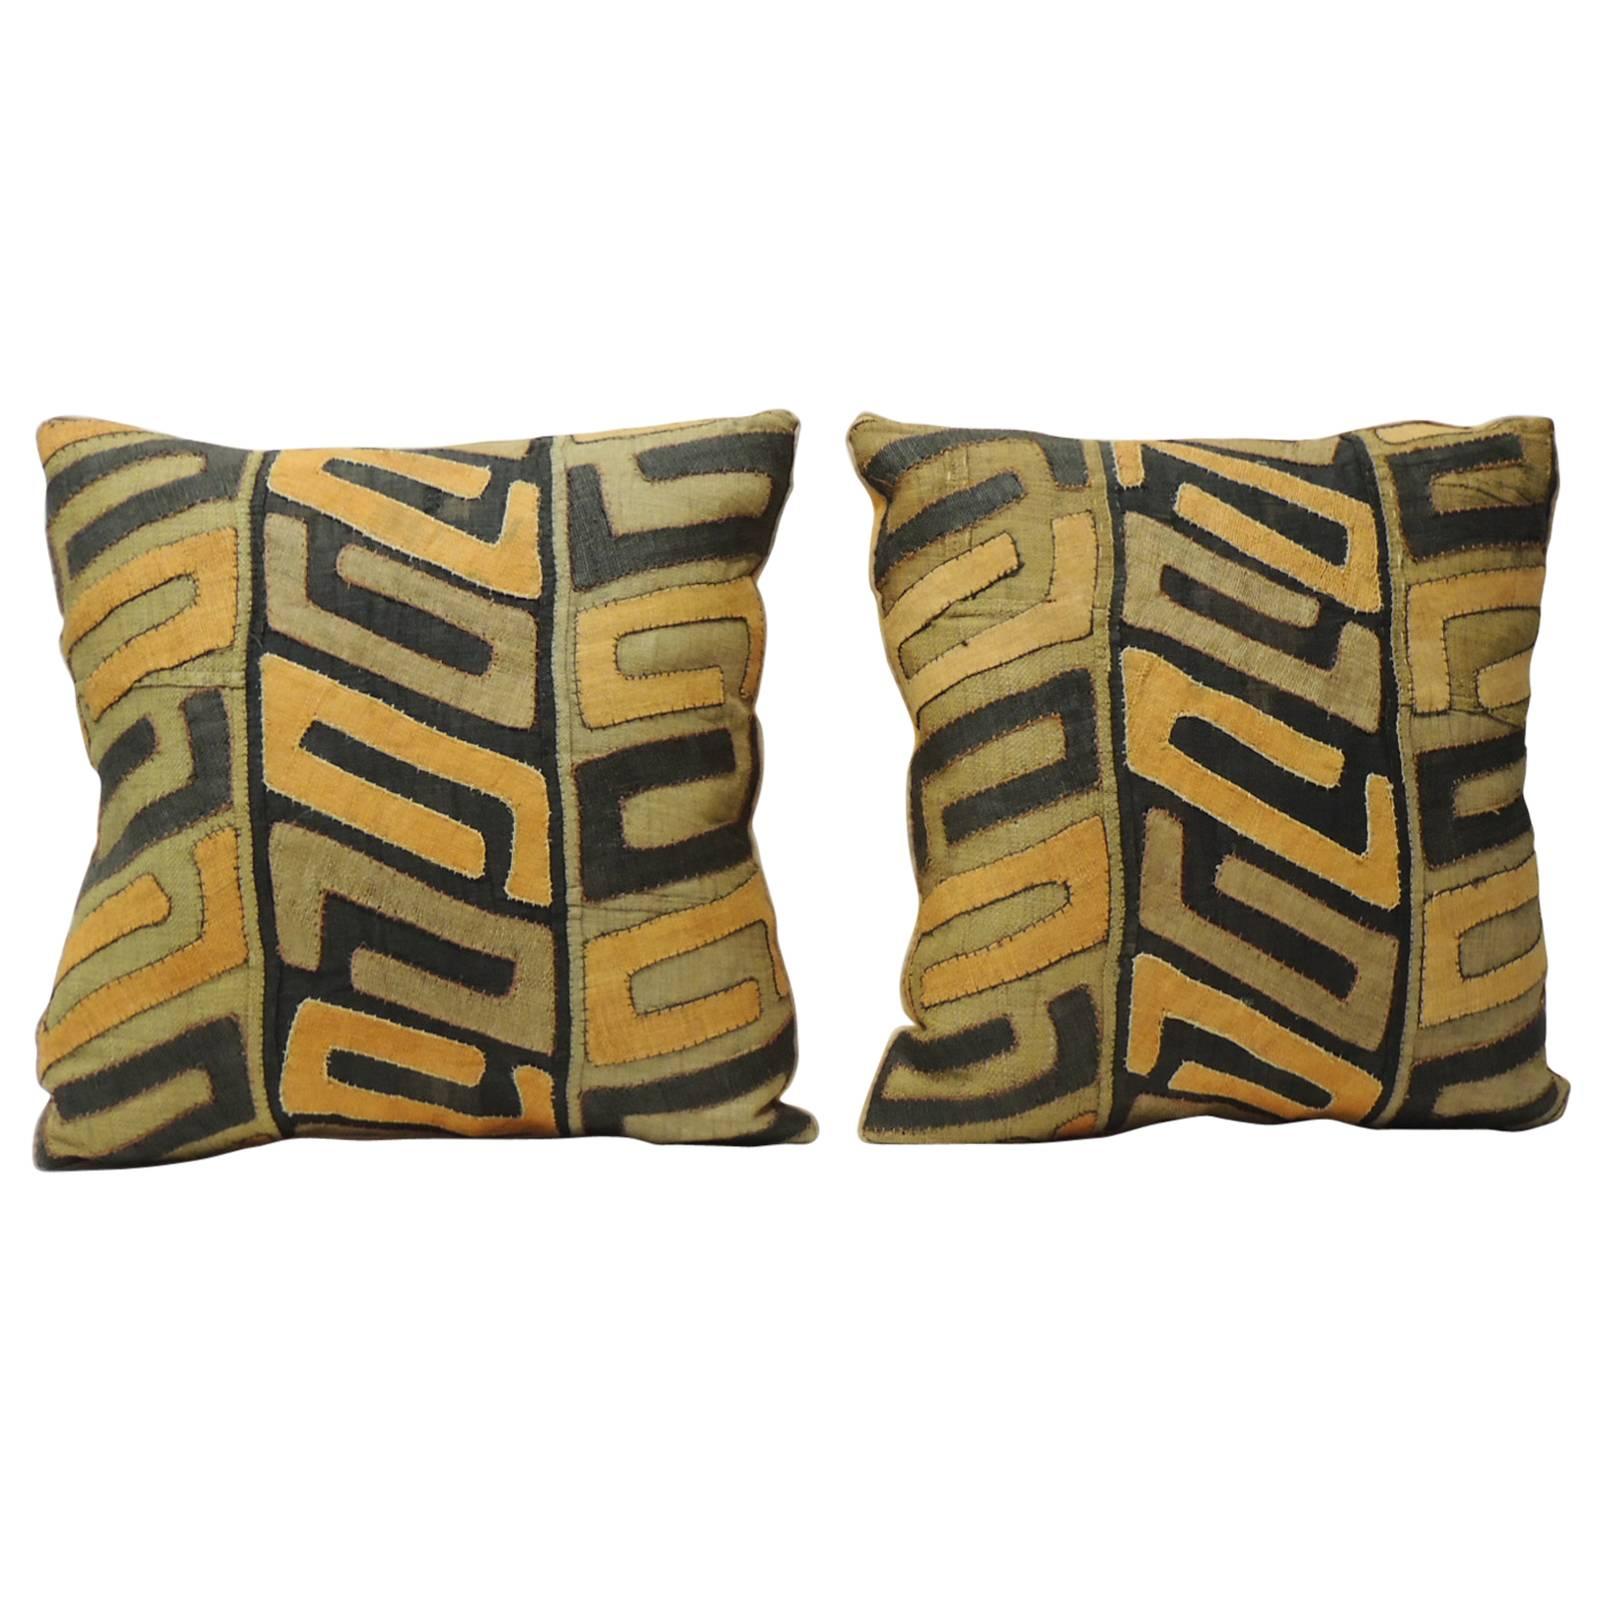 Pair of 19th Century Orange African Kuba Decorative Textured Finish Pillows